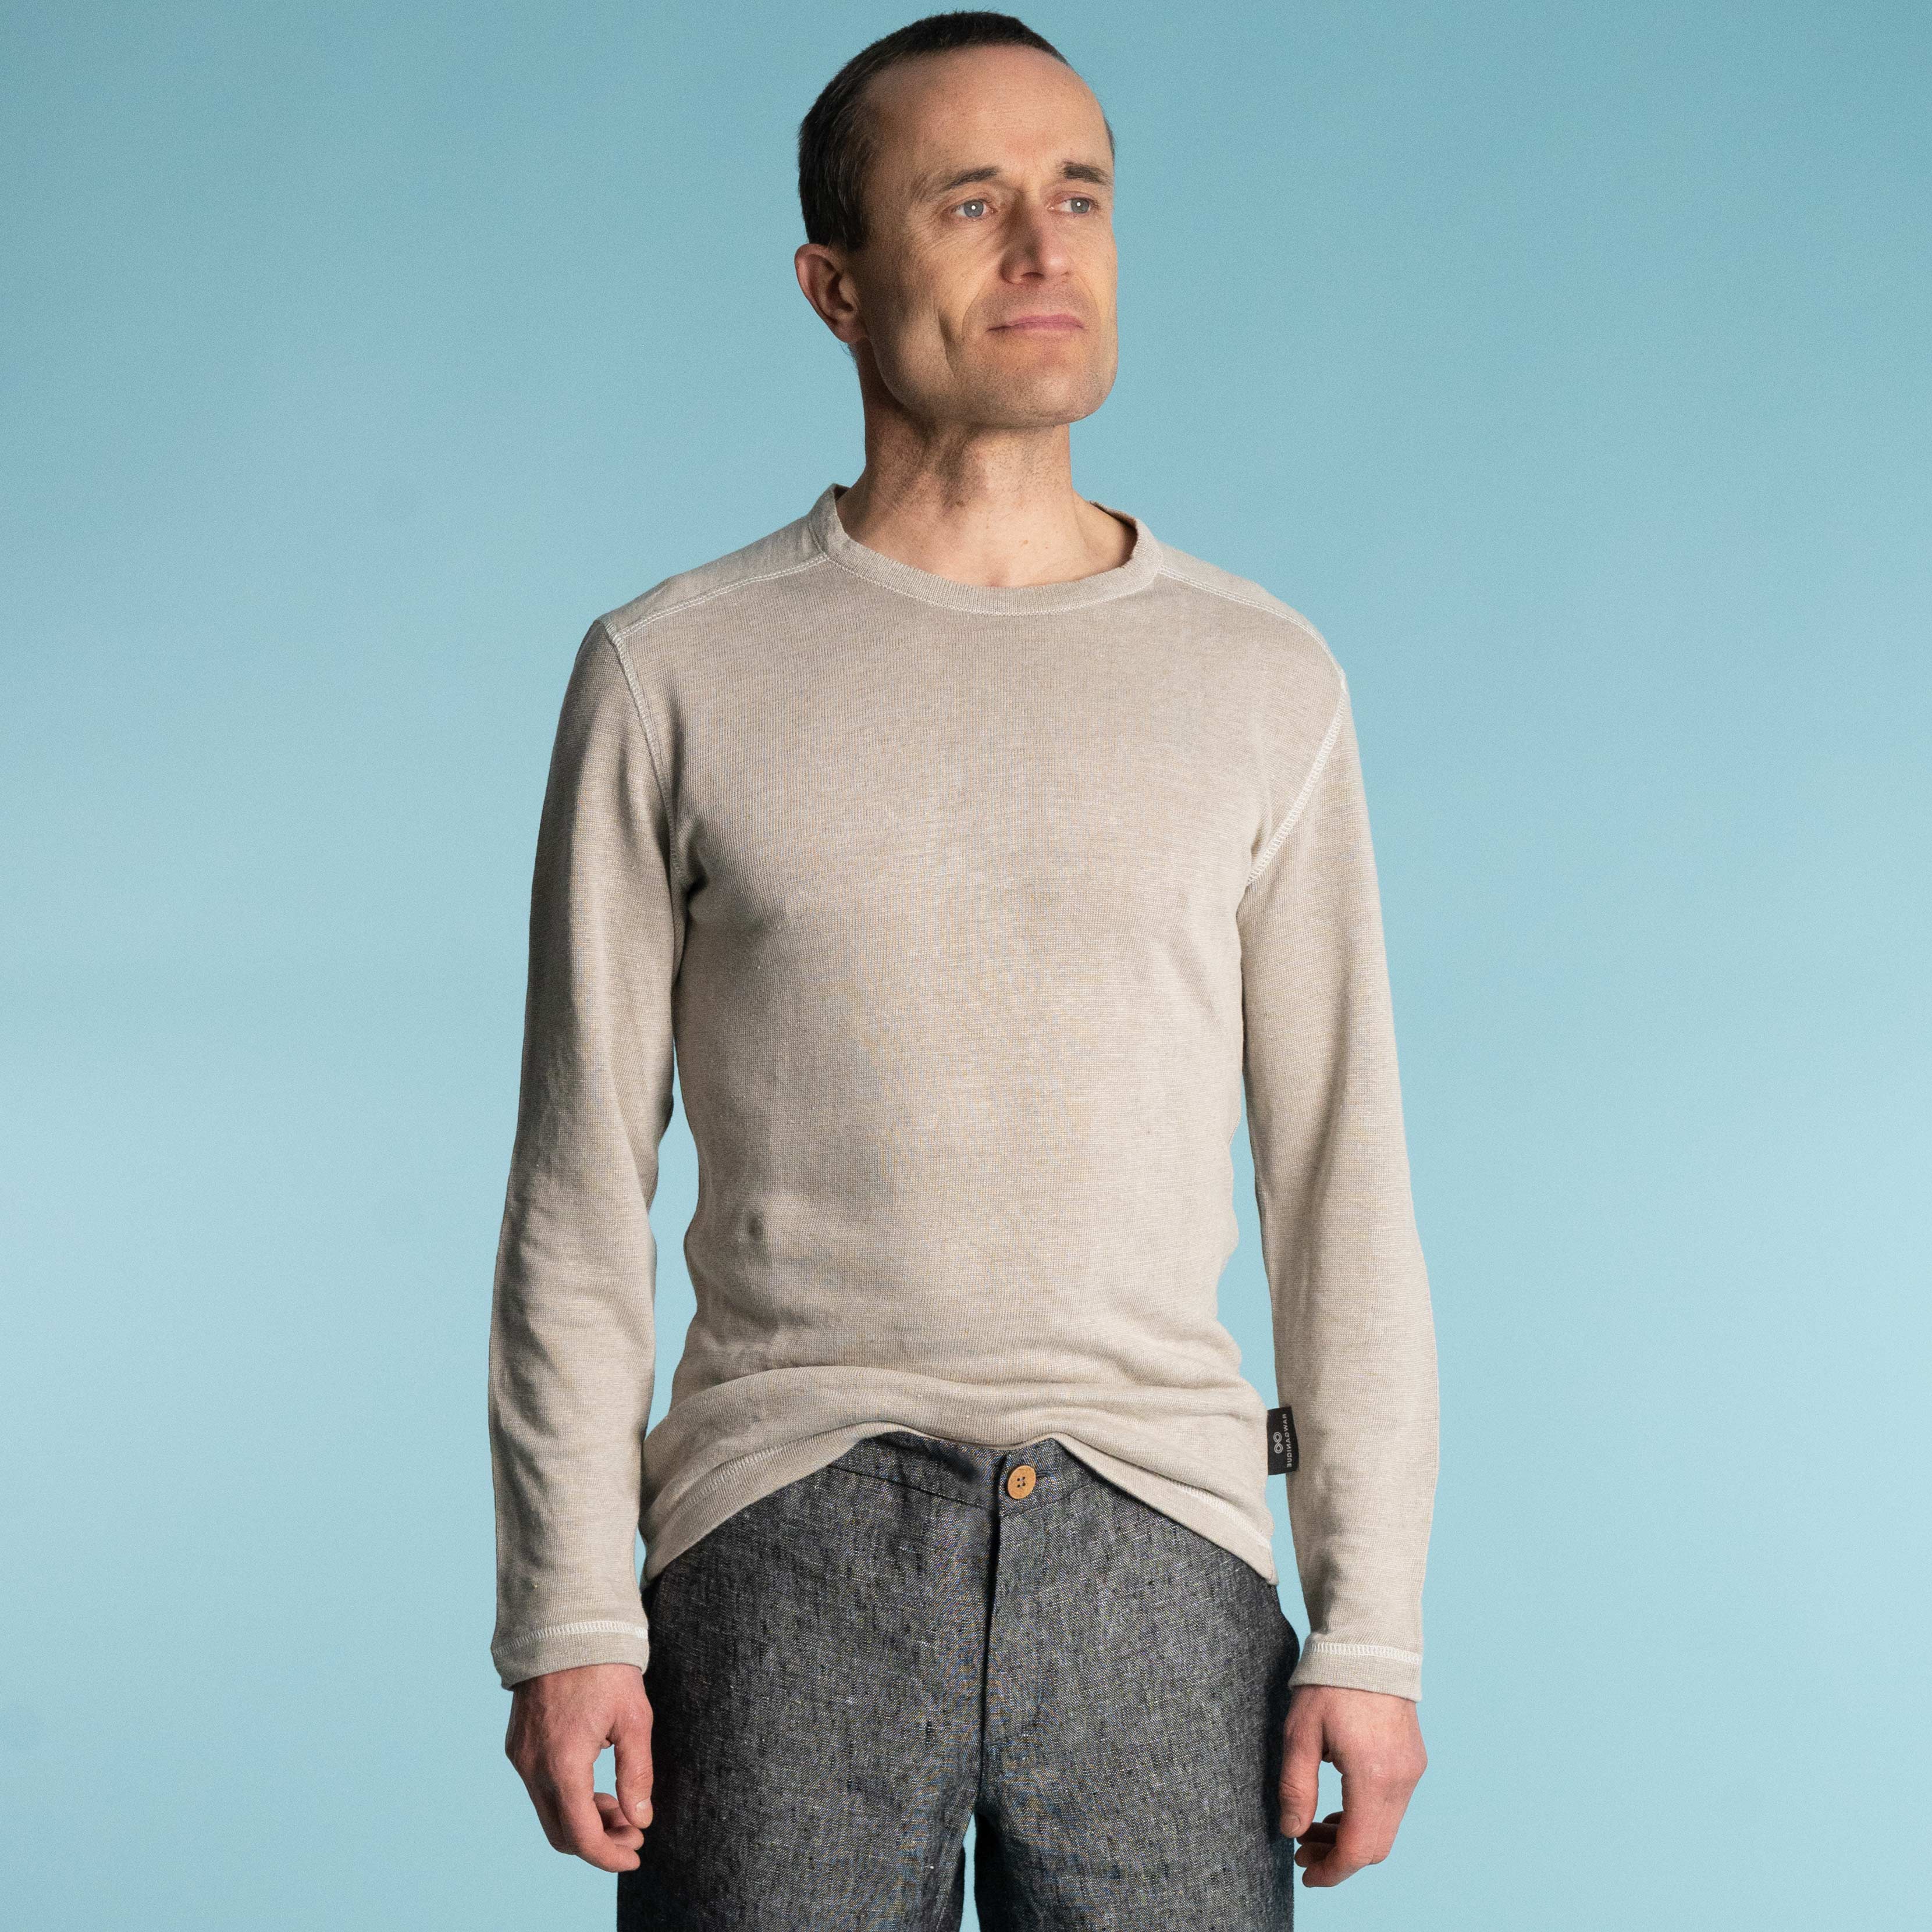 100% Organic Linen Knit Shirt Pullover Sweatshop-free Chemical-free ...